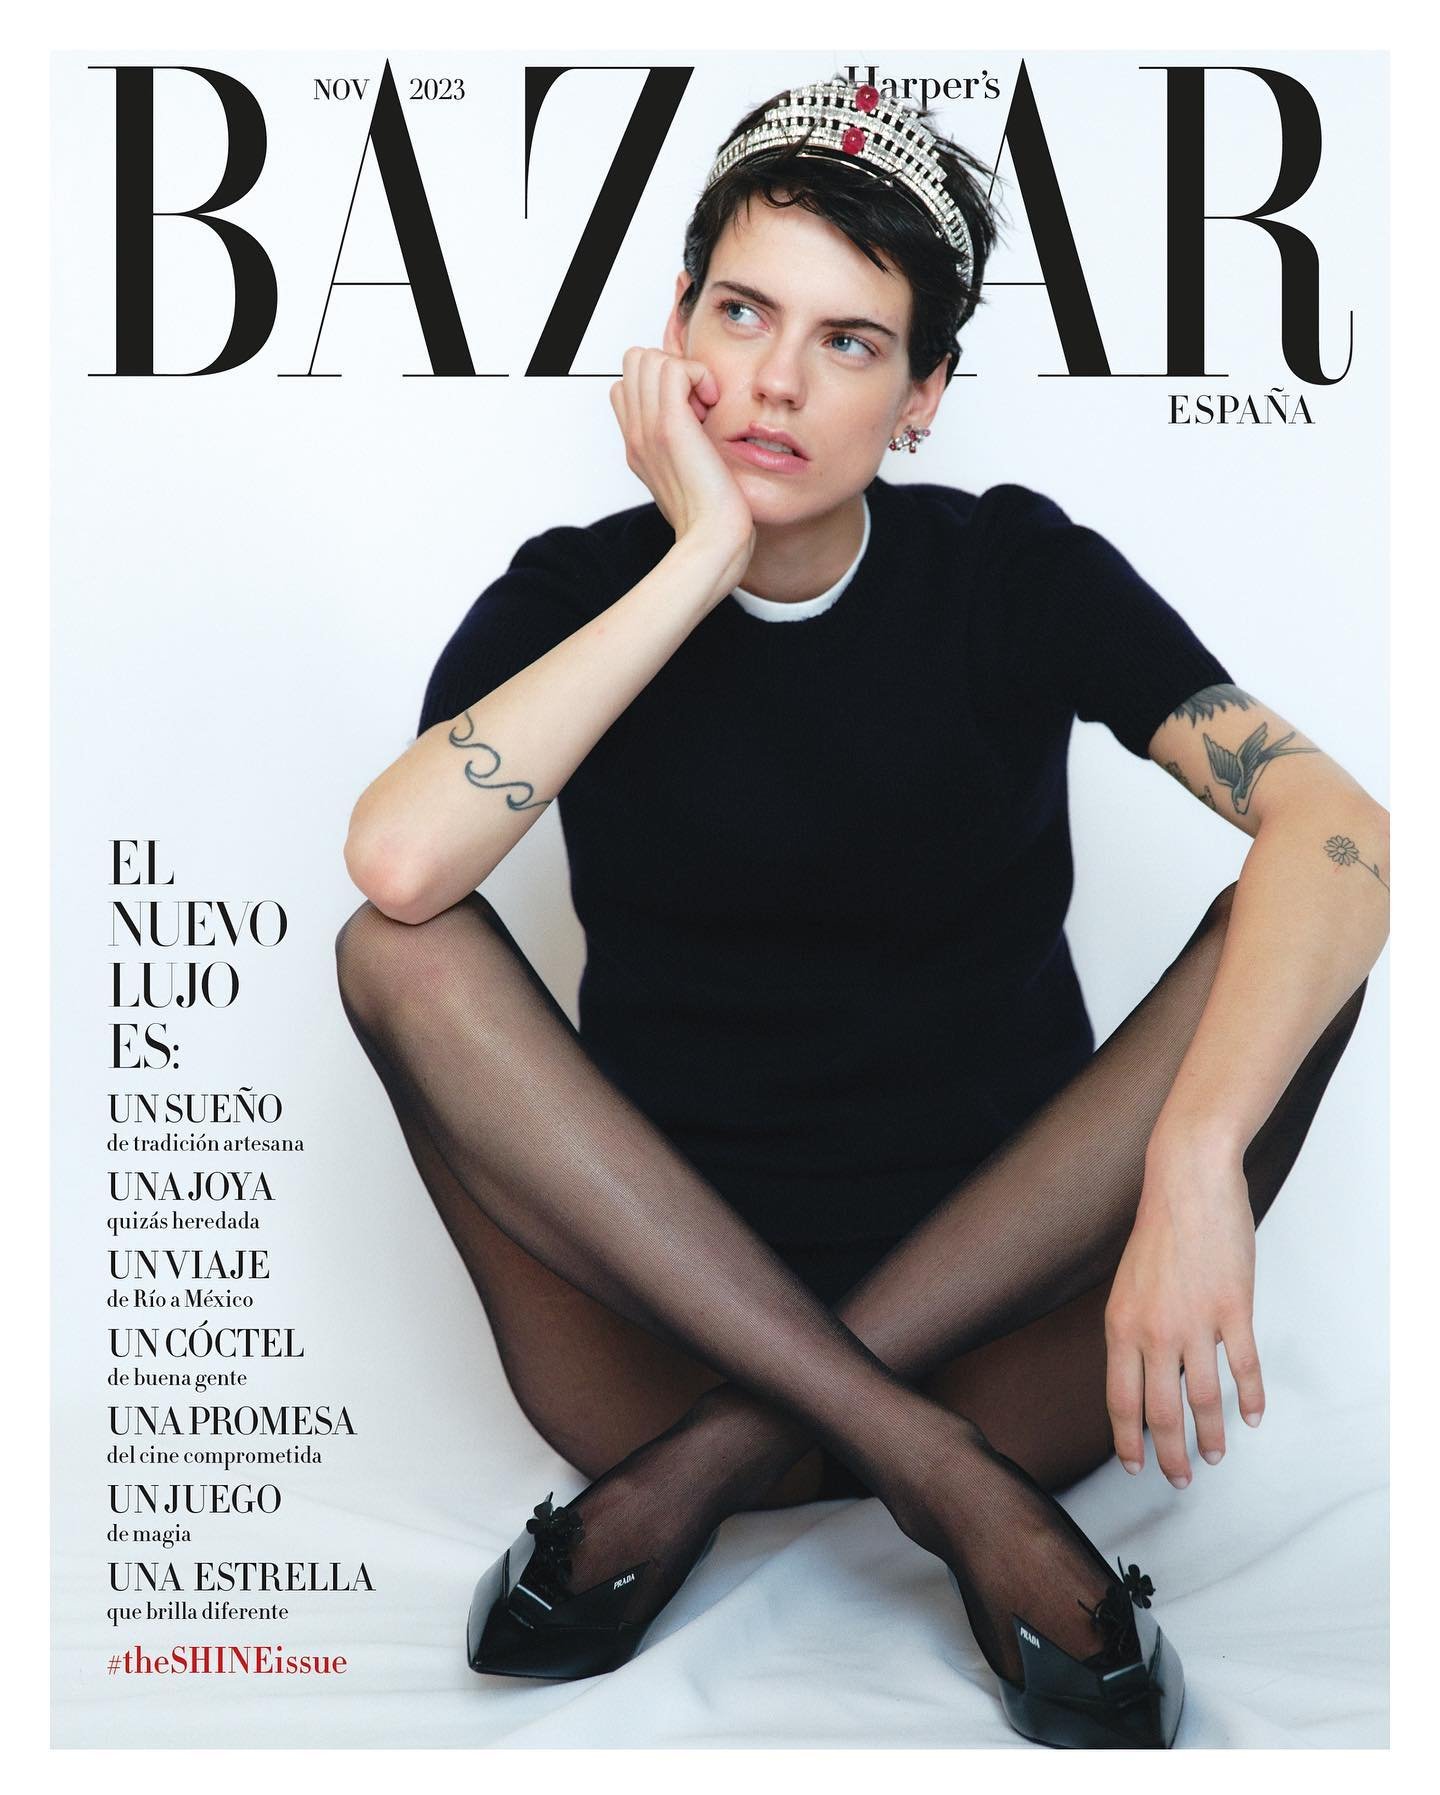 Miriam-Sanchez-by-Javier-Biosca-Harper's-bazaar-espana-november-2023-11.jpg